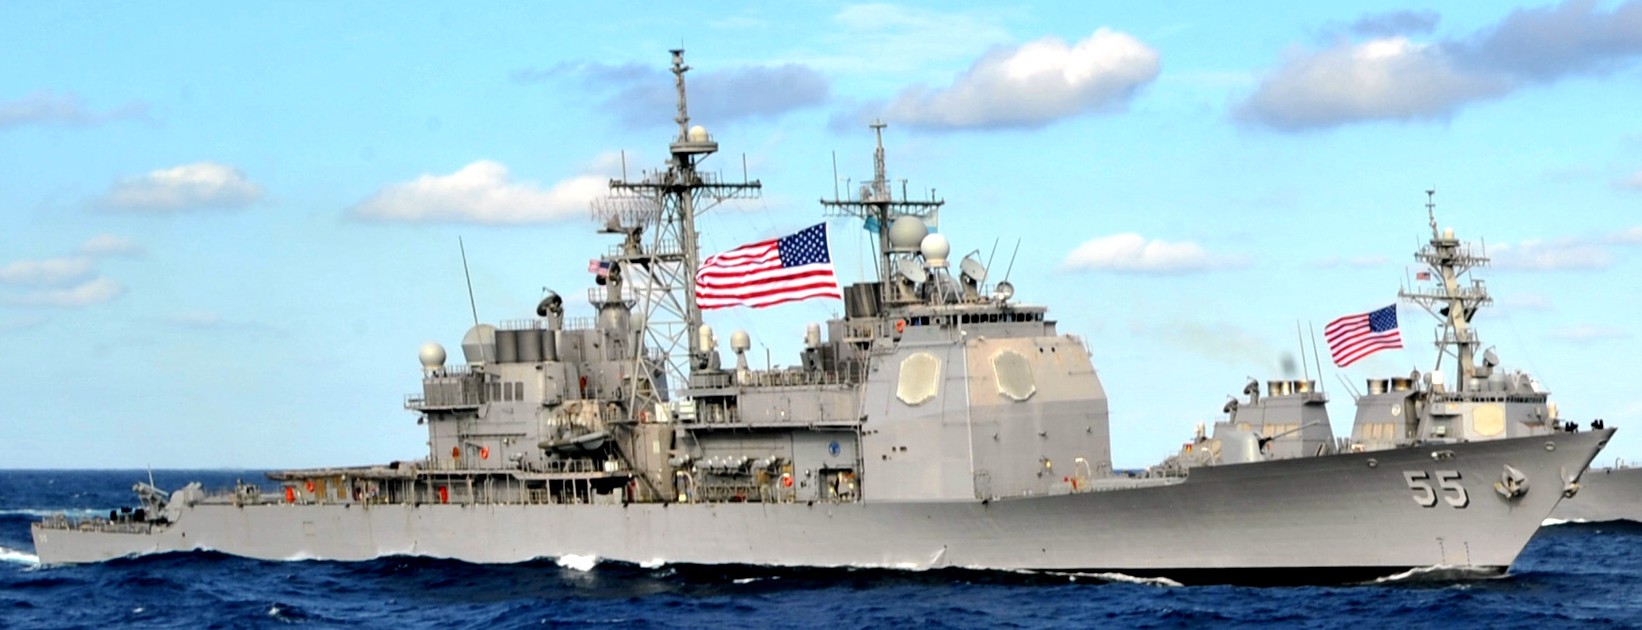 cg-55 uss leyte gulf ticonderoga class guided missile cruiser aegis us navy 33